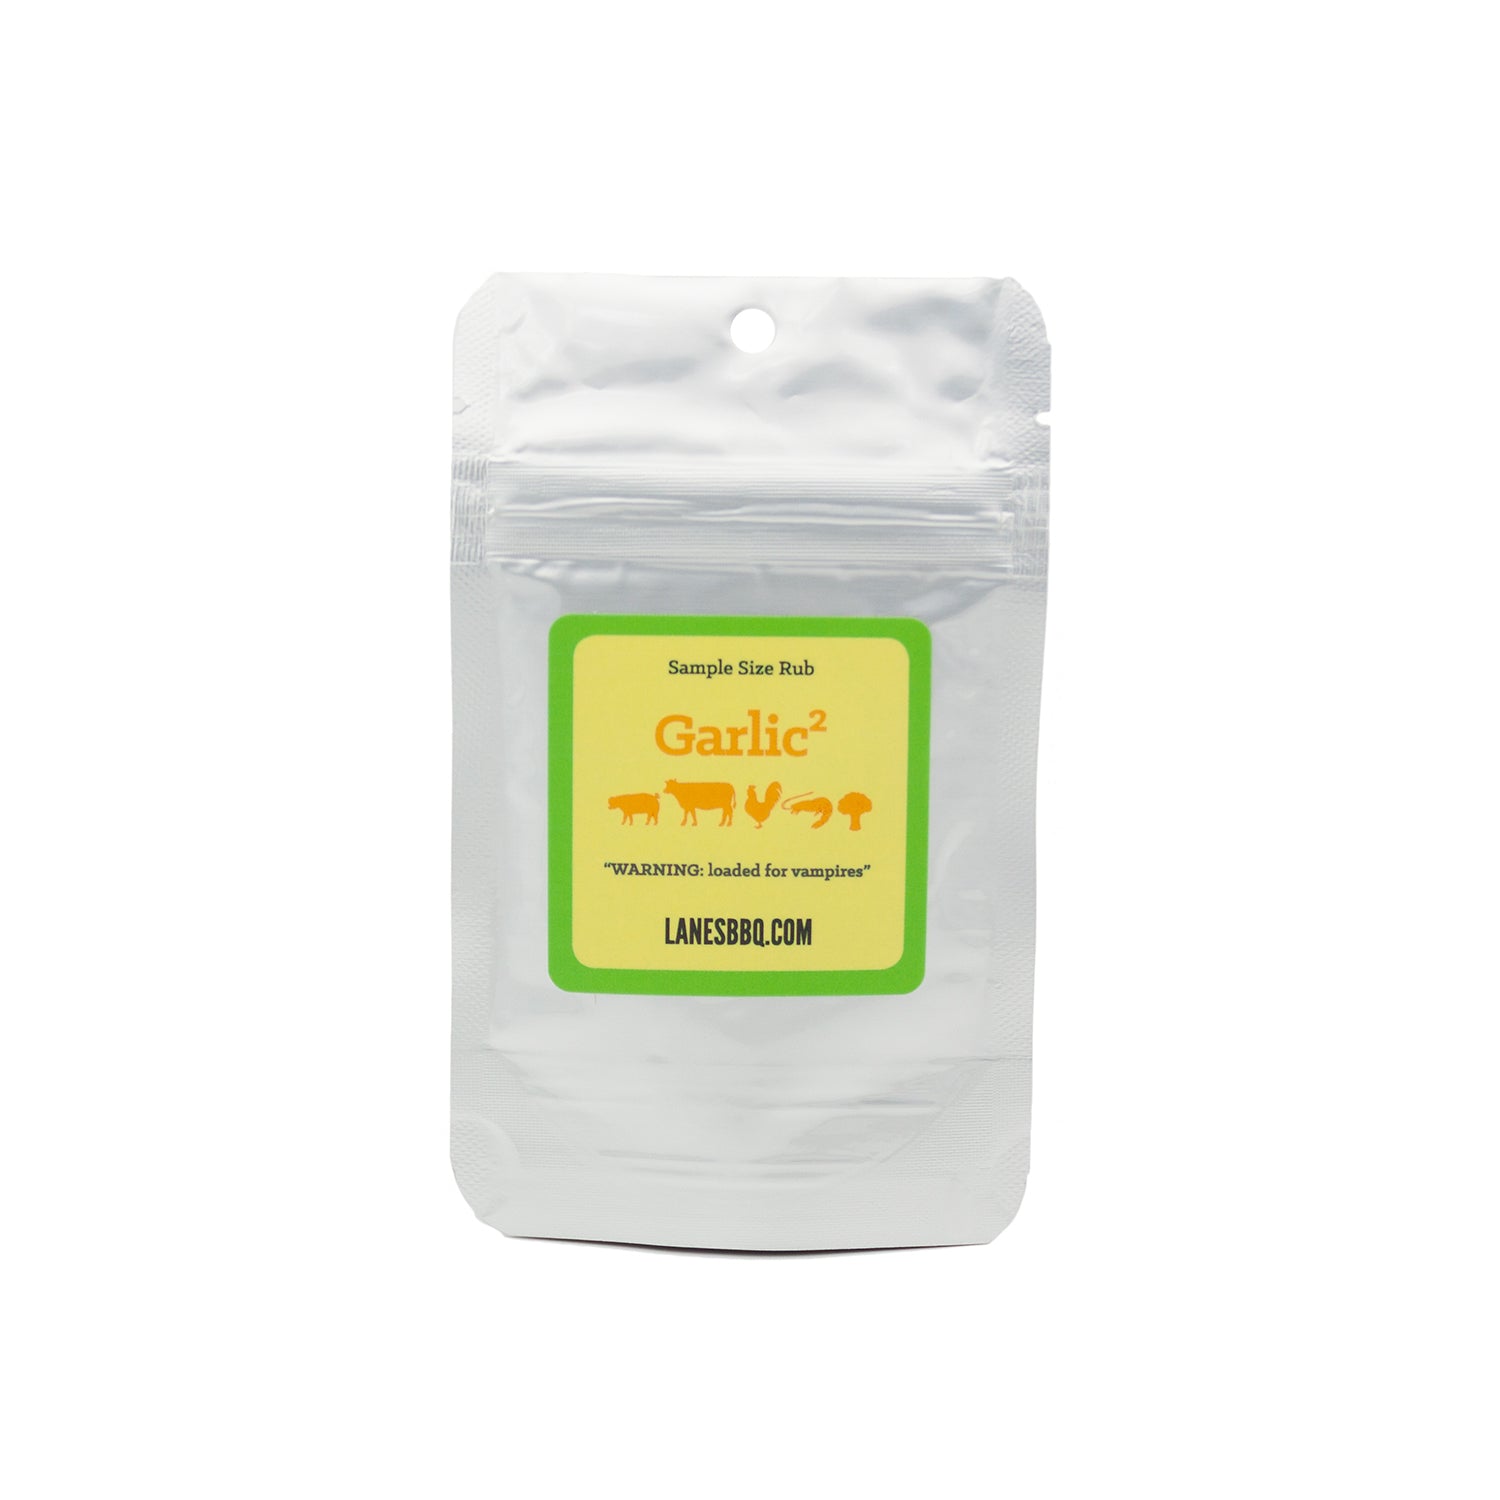 2 ounce bag of Garlic seasoning